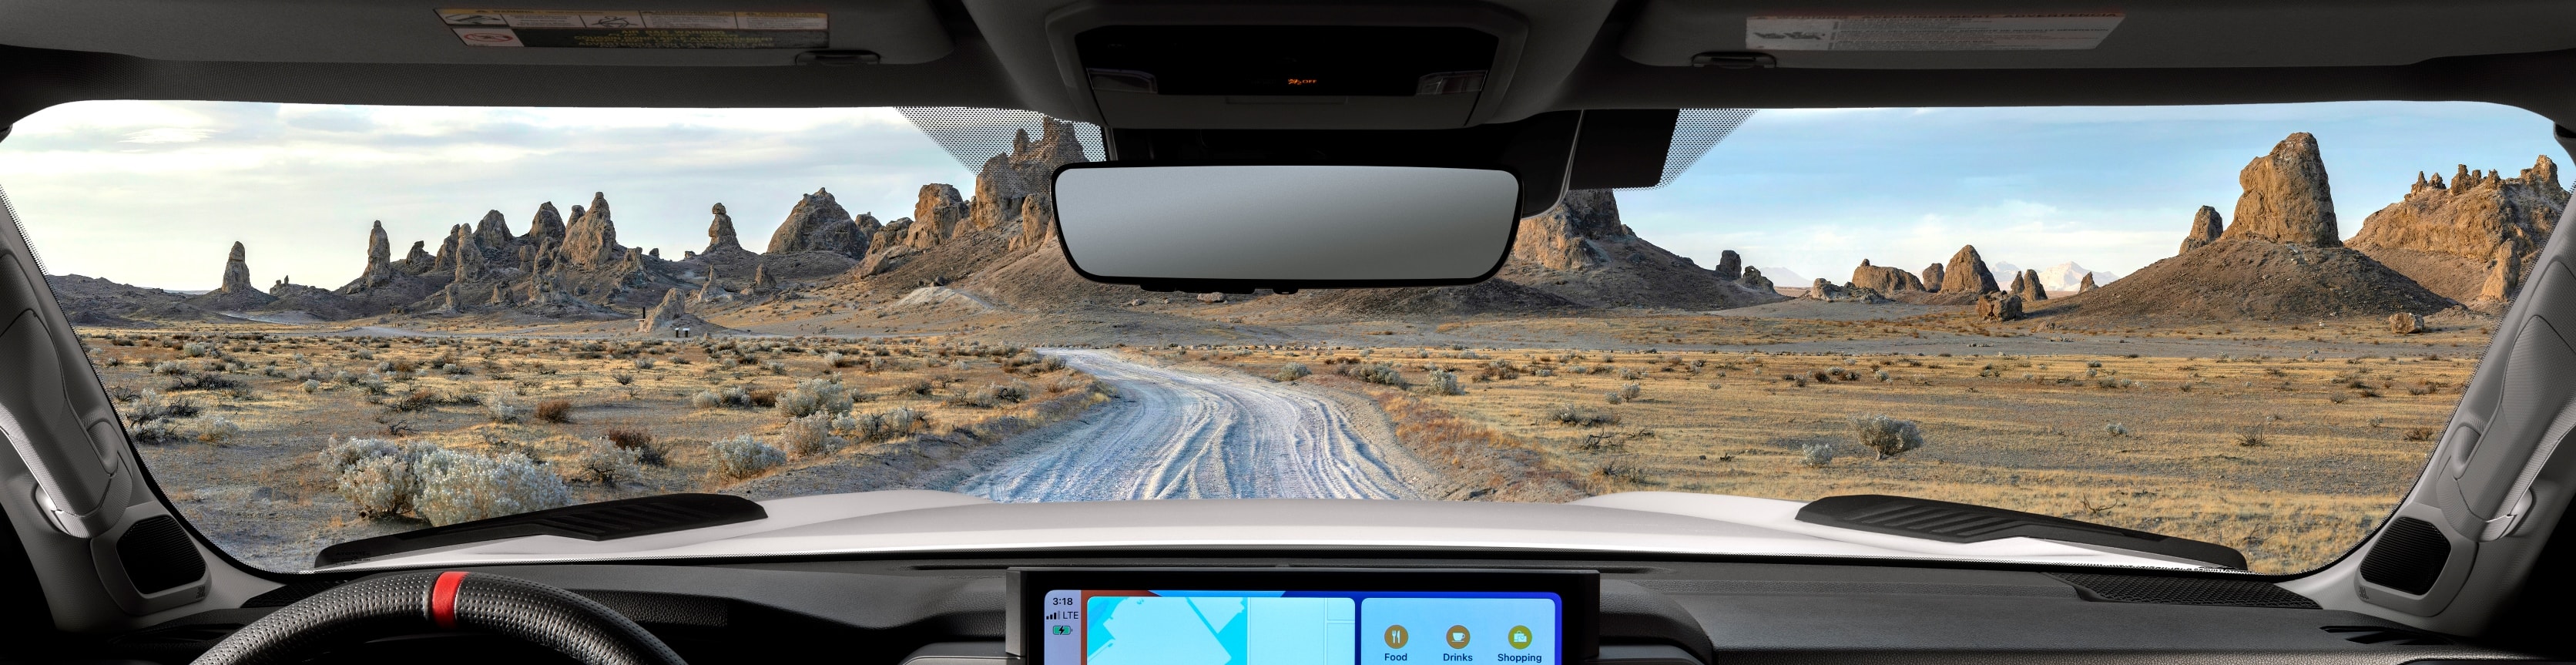 2022 Toyota Tundra Interior Photo Shows New Touchscreen Infotainment